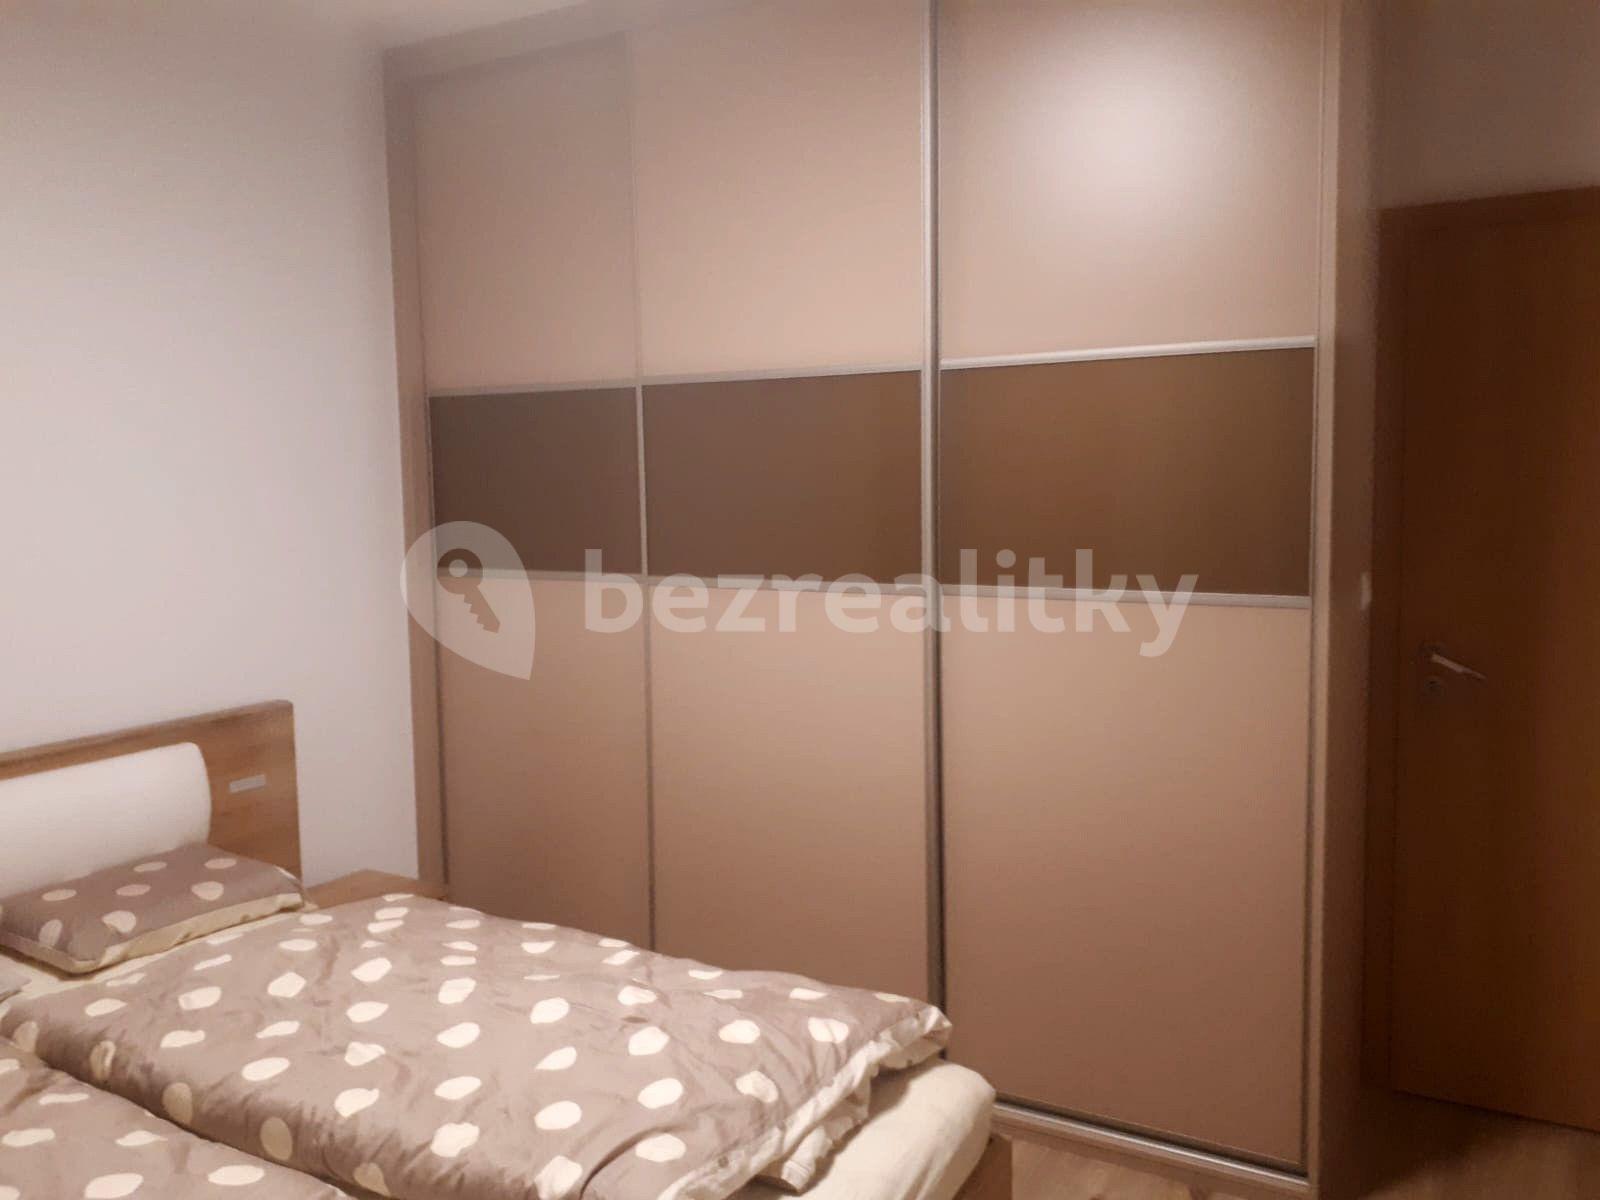 2 bedroom with open-plan kitchen flat for sale, 79 m², Tryskovická, Prague, Prague